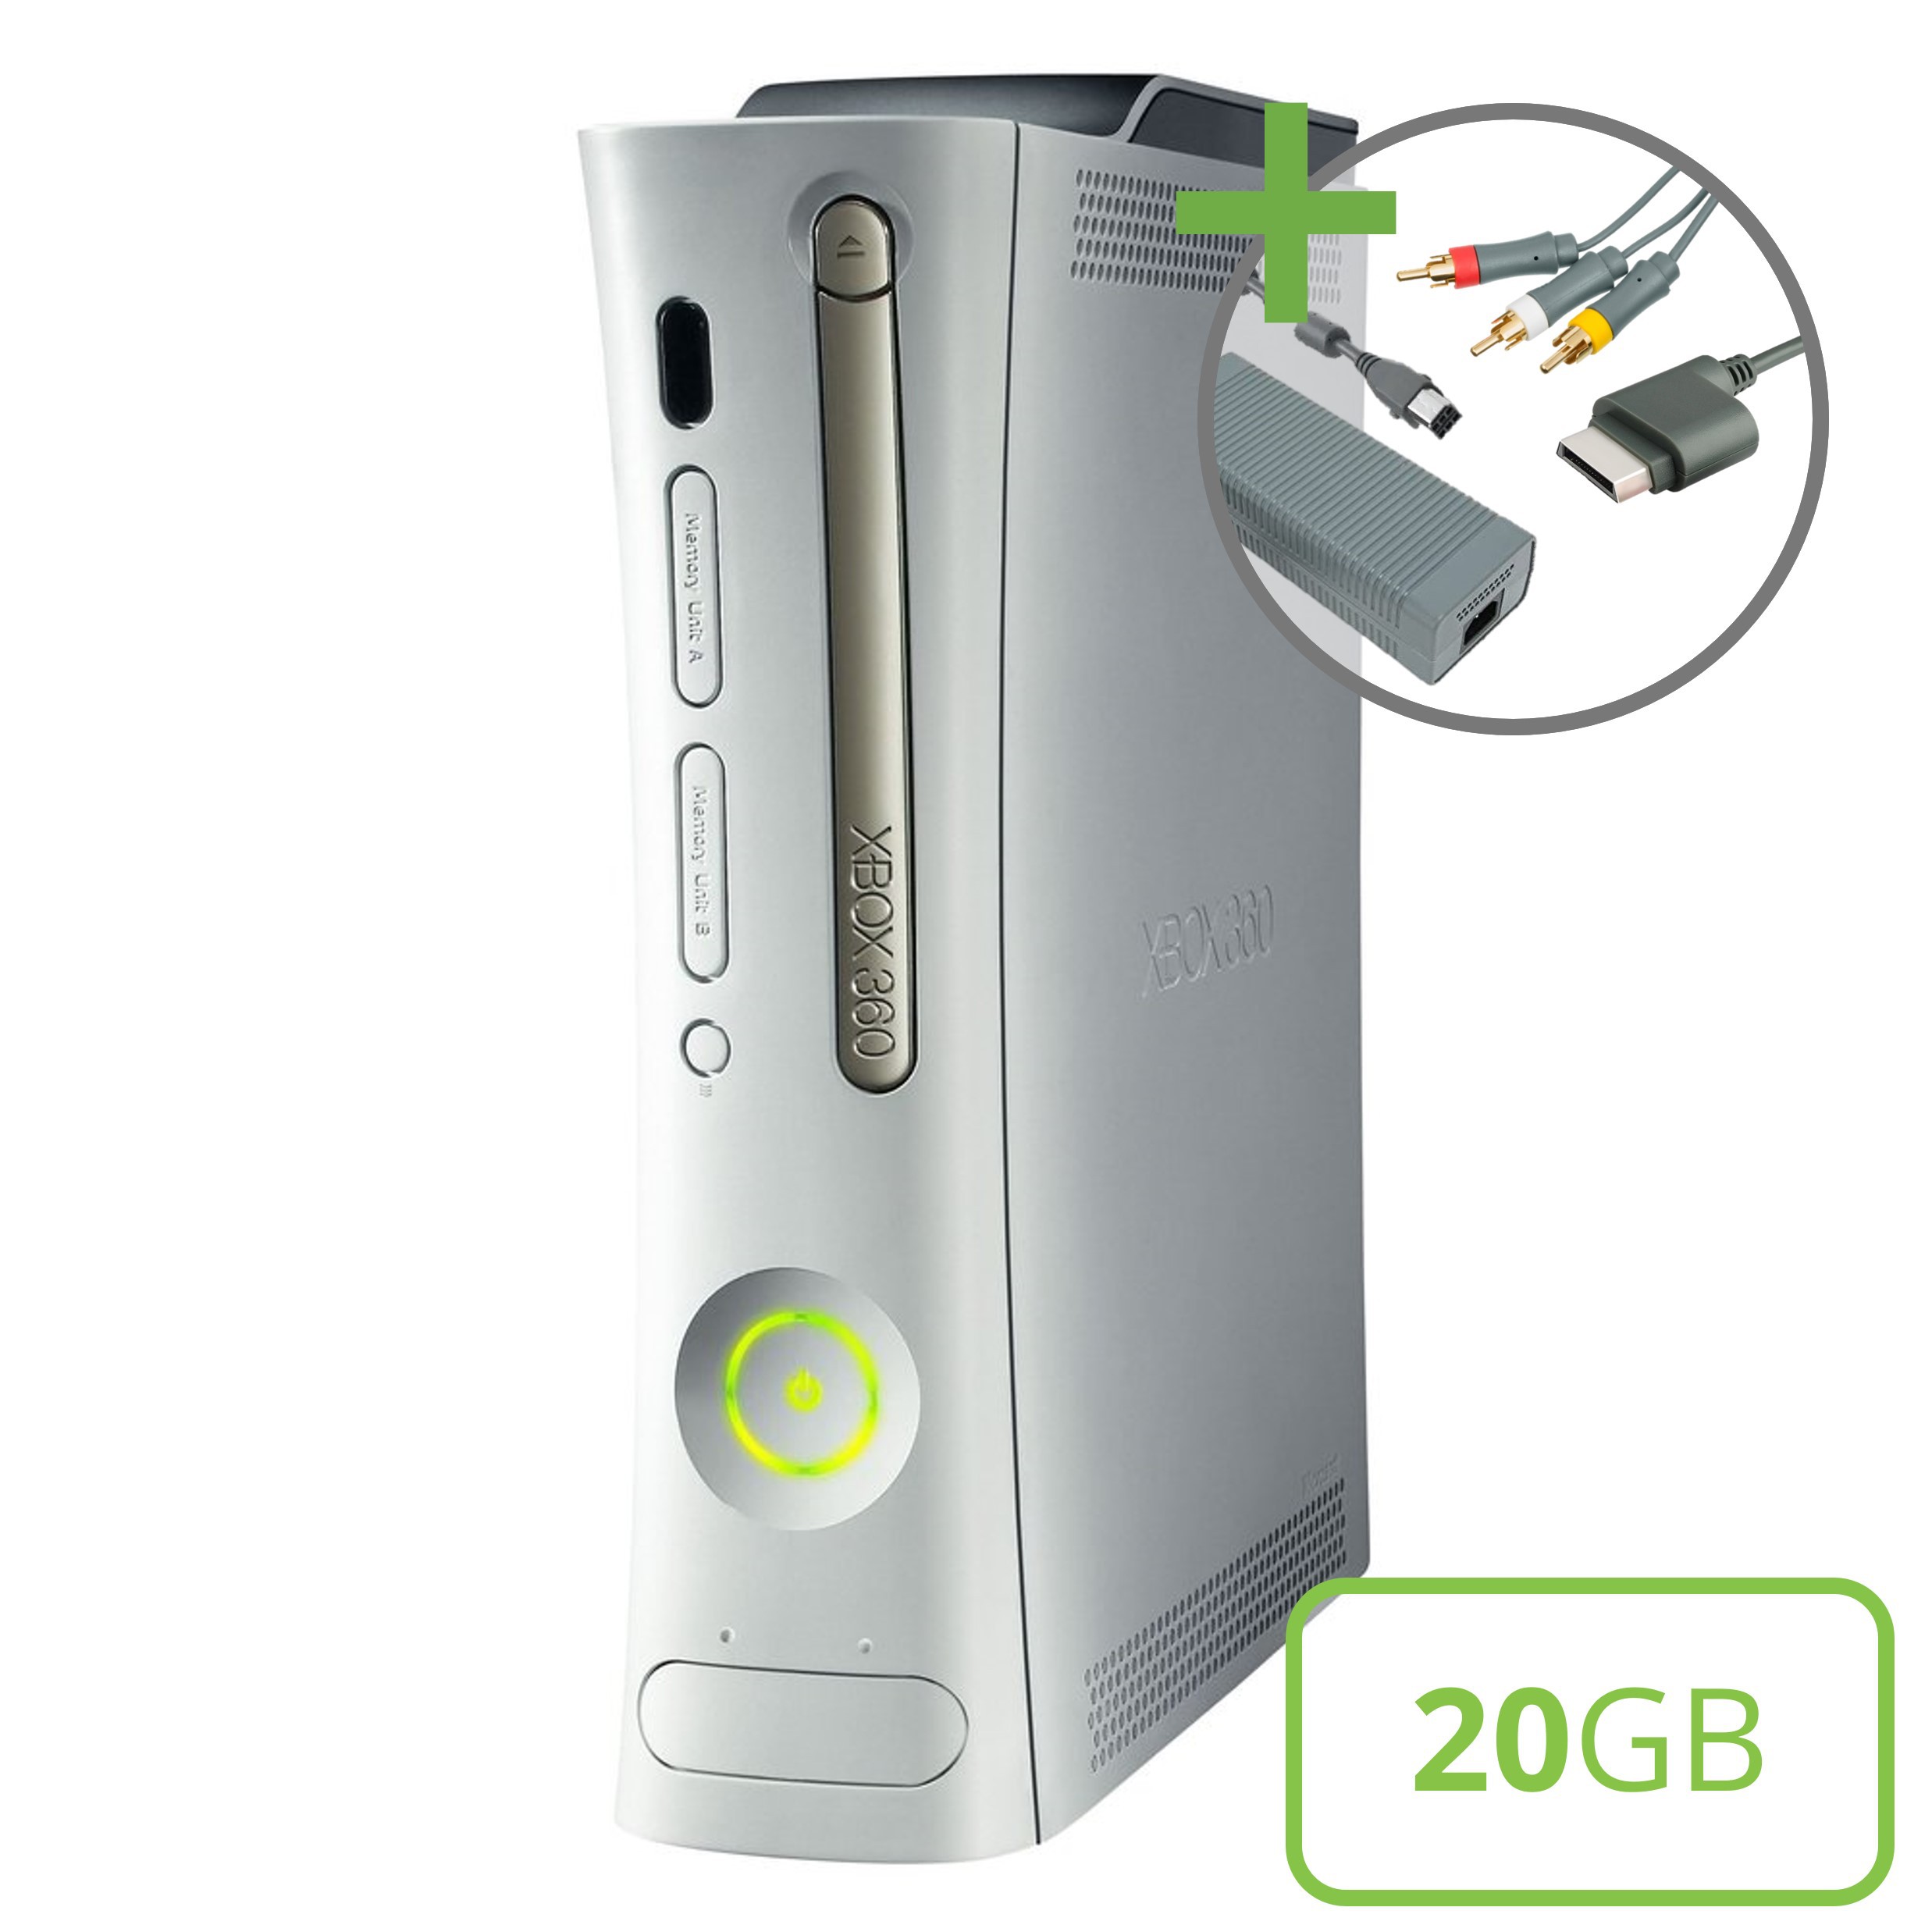 Microsoft Xbox 360 Premium Console (AV) - 20GB - Xbox 360 Hardware